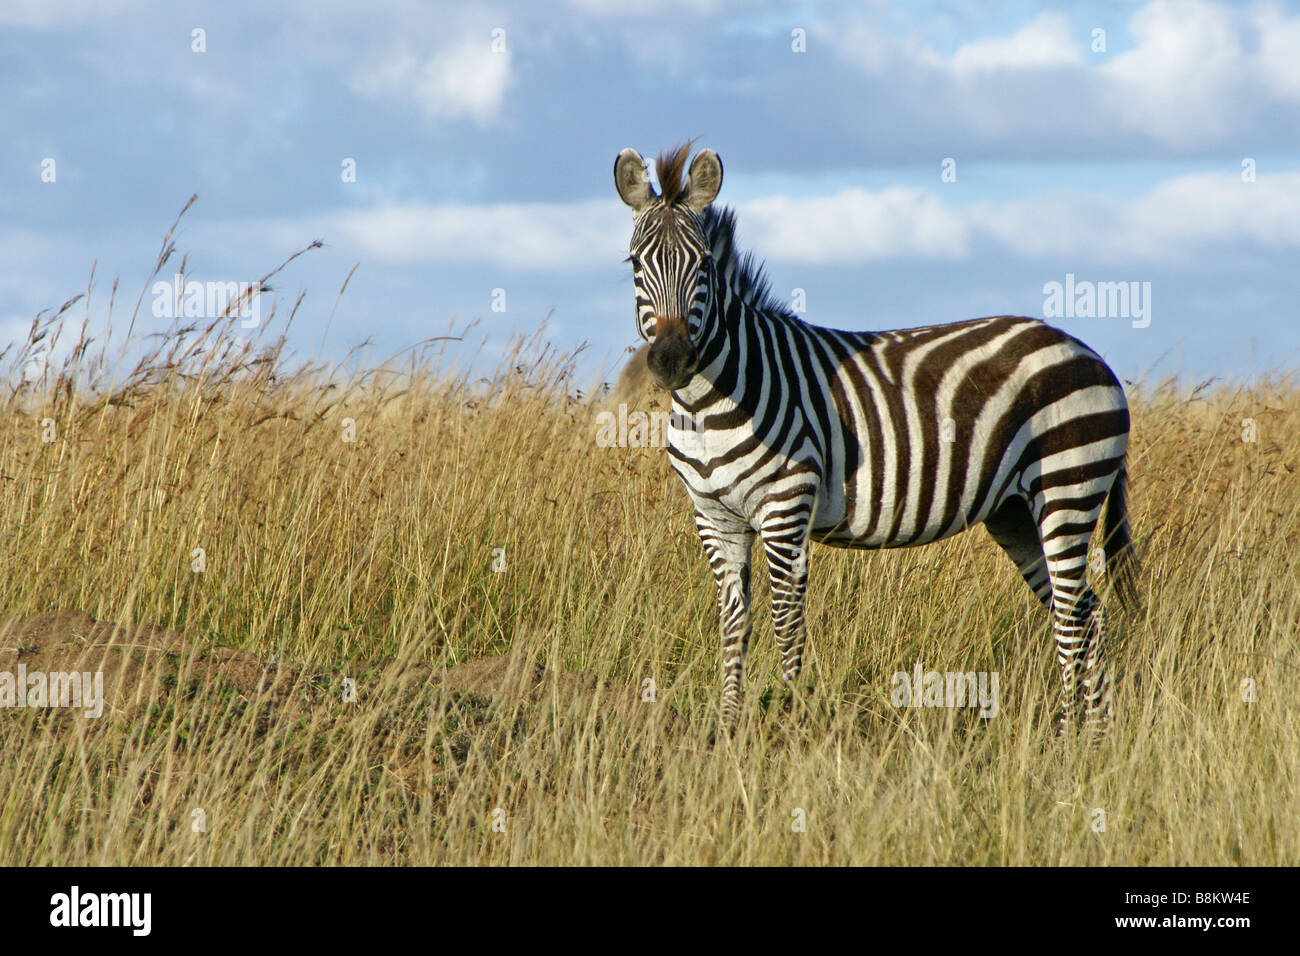 Burchell's, common or plains zebra in long grass, Masai Mara, Kenya Stock Photo